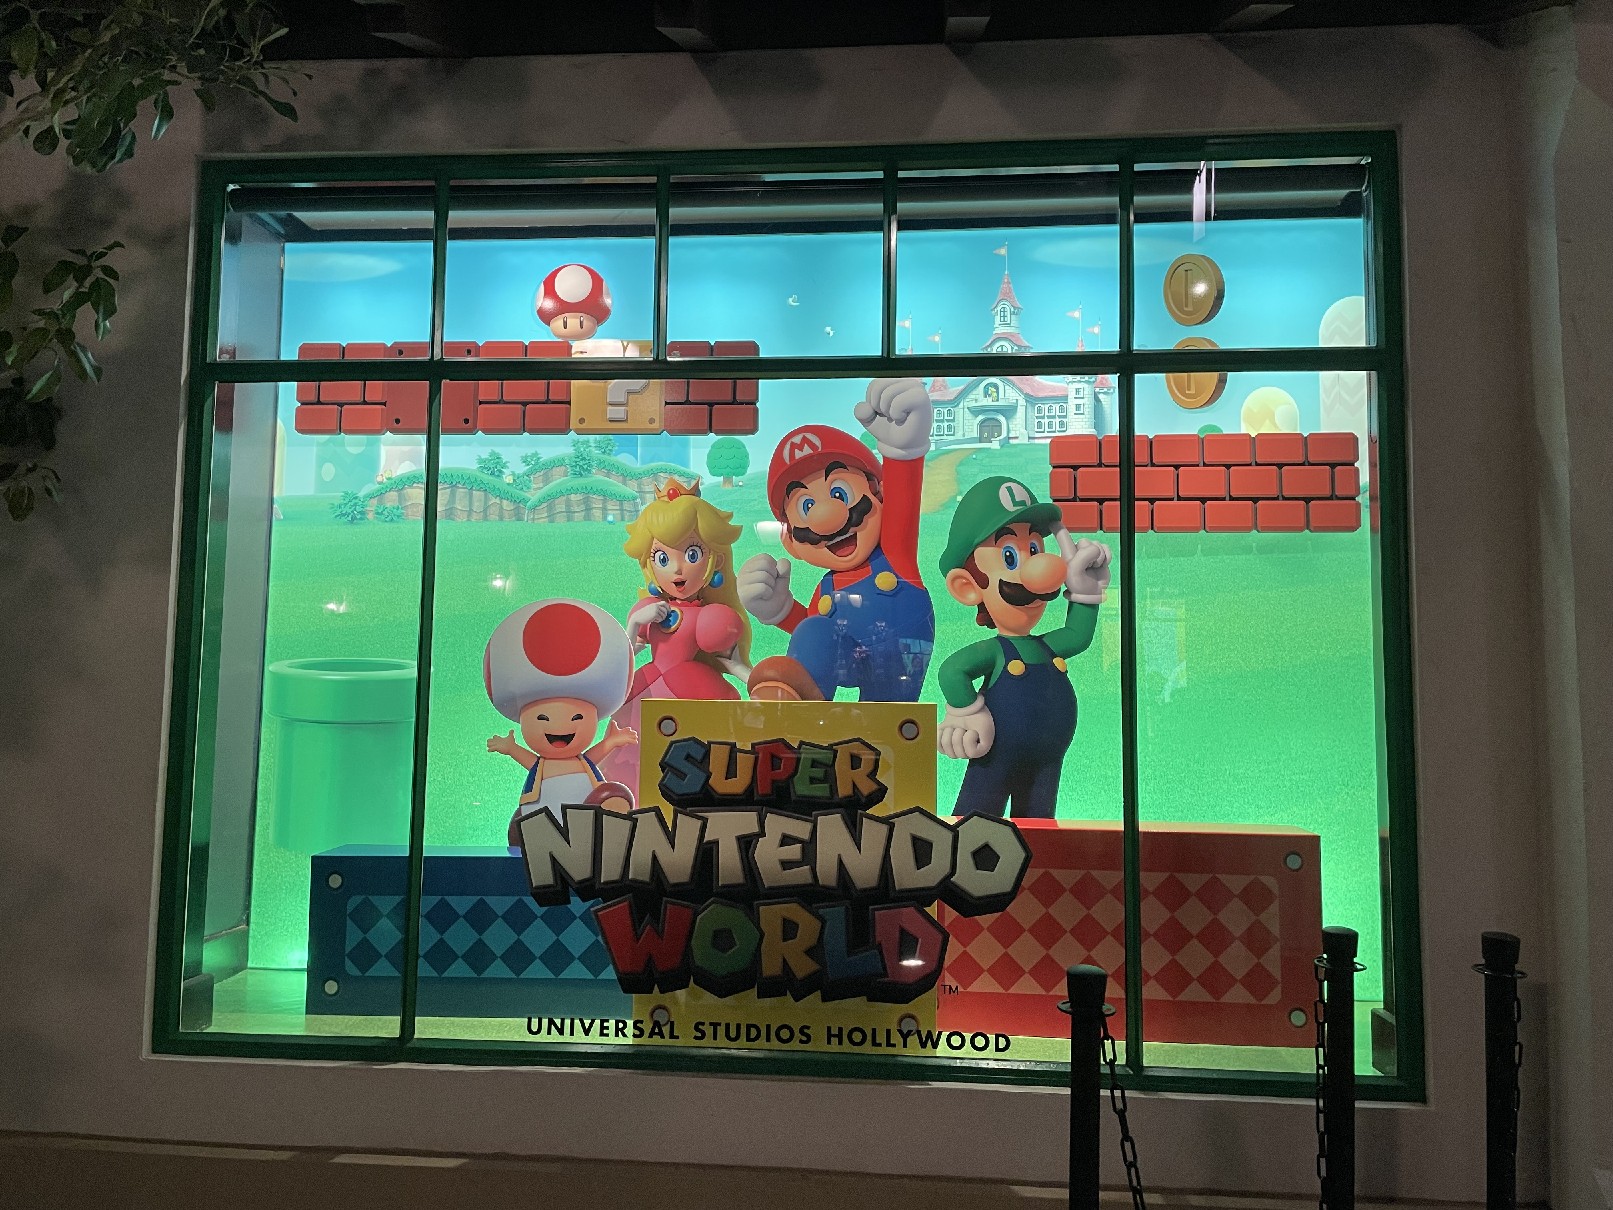 Super Nintendo World Store Opens at Universal CityWalk Hollywood